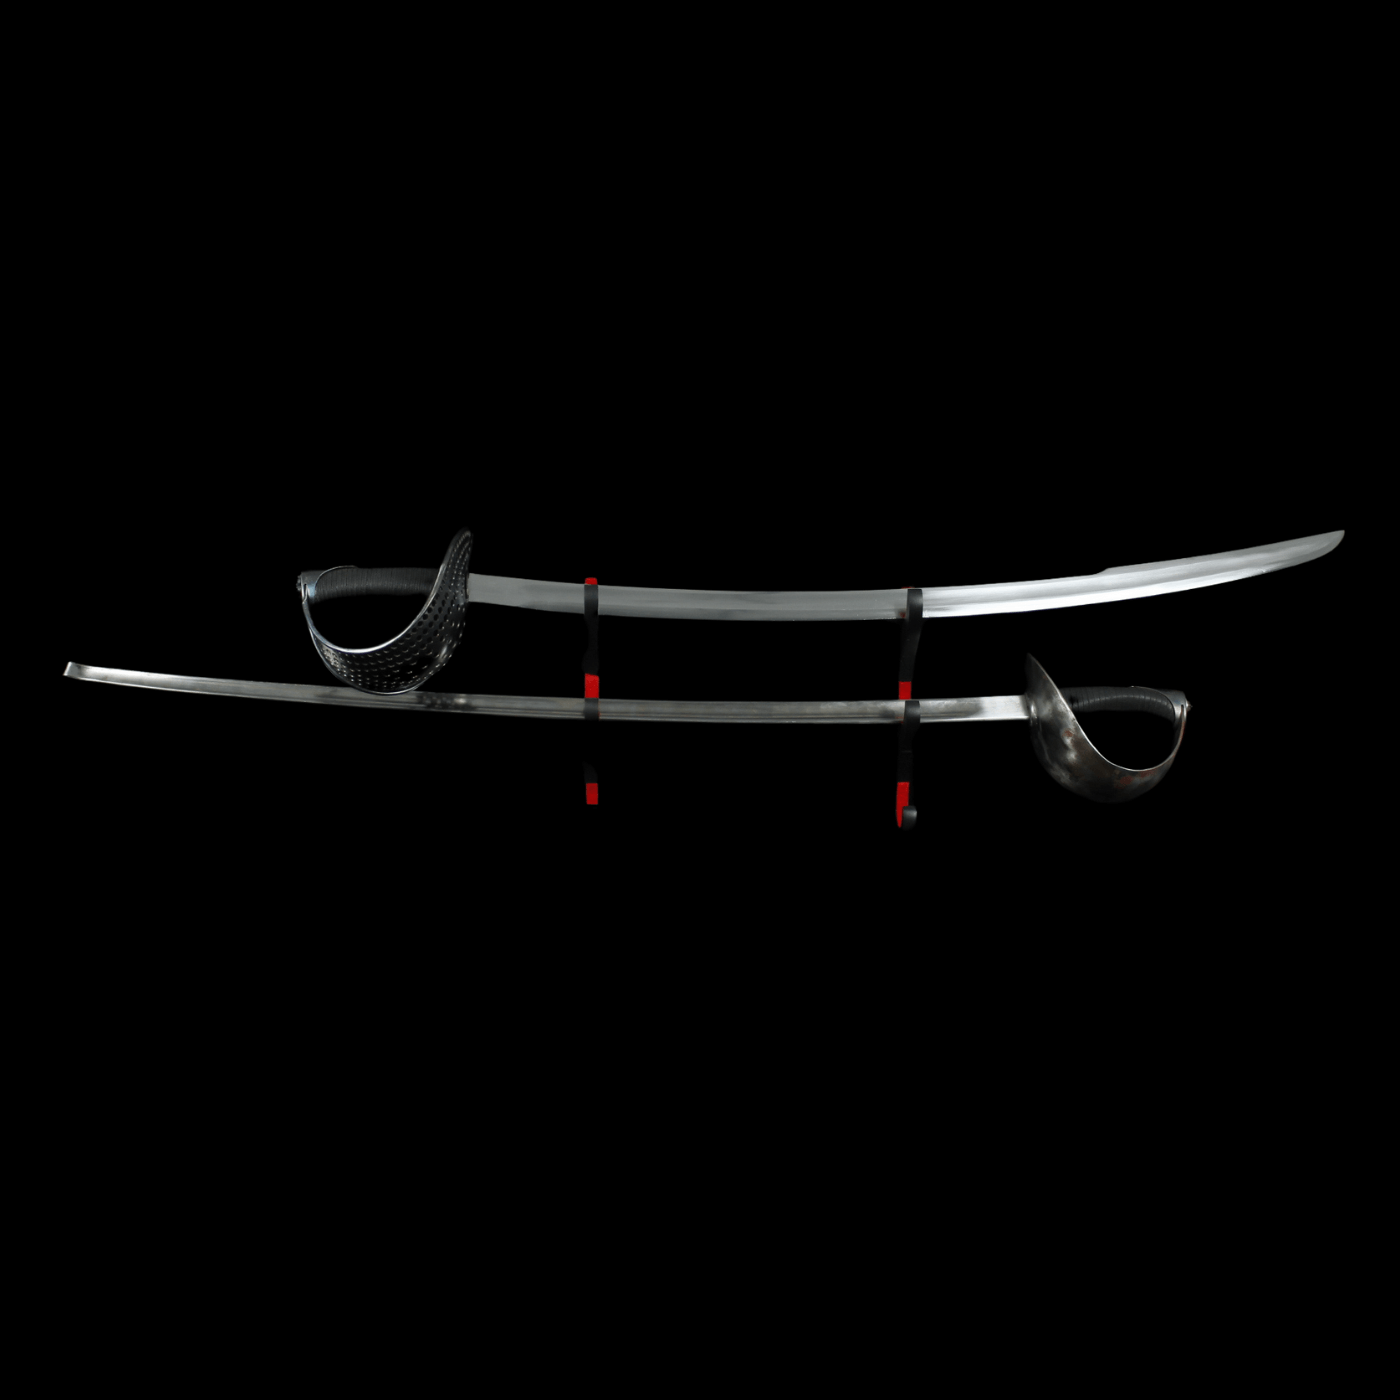 SWM-1026 Swordier medieval saber sword replica with Shashka style spring steel blade design